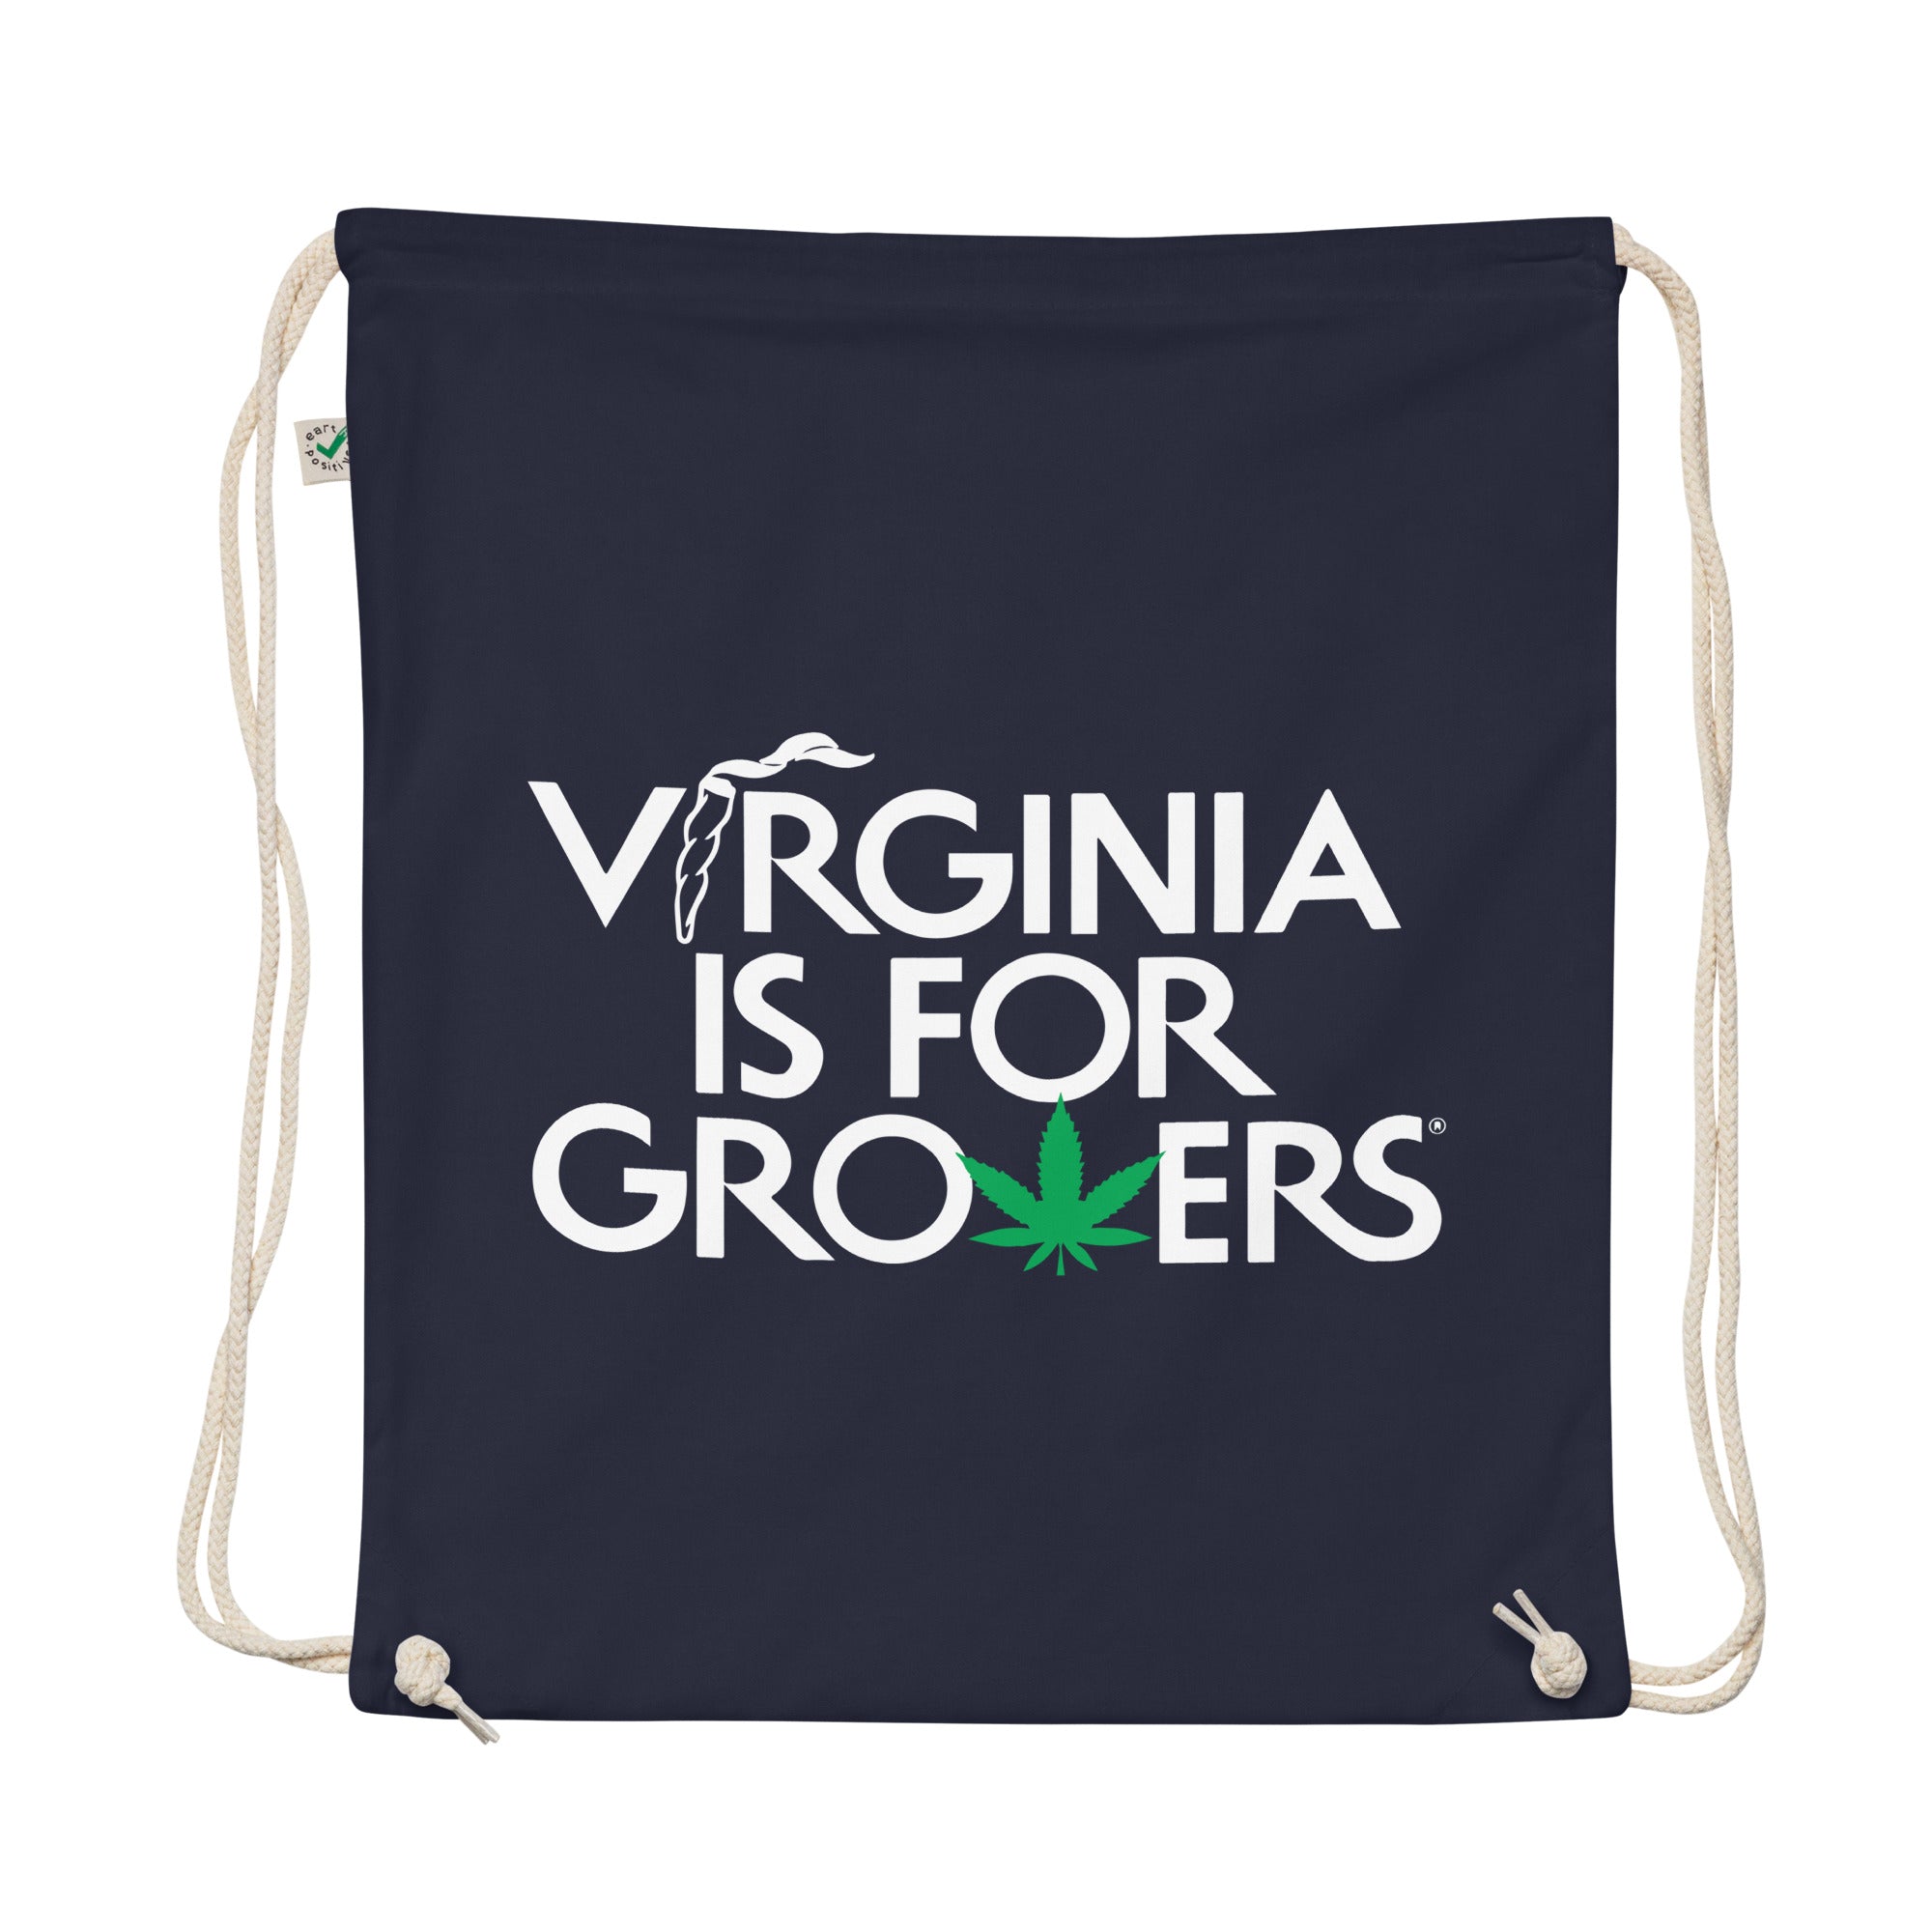 "VA is for Growers" Organic cotton drawstring bag